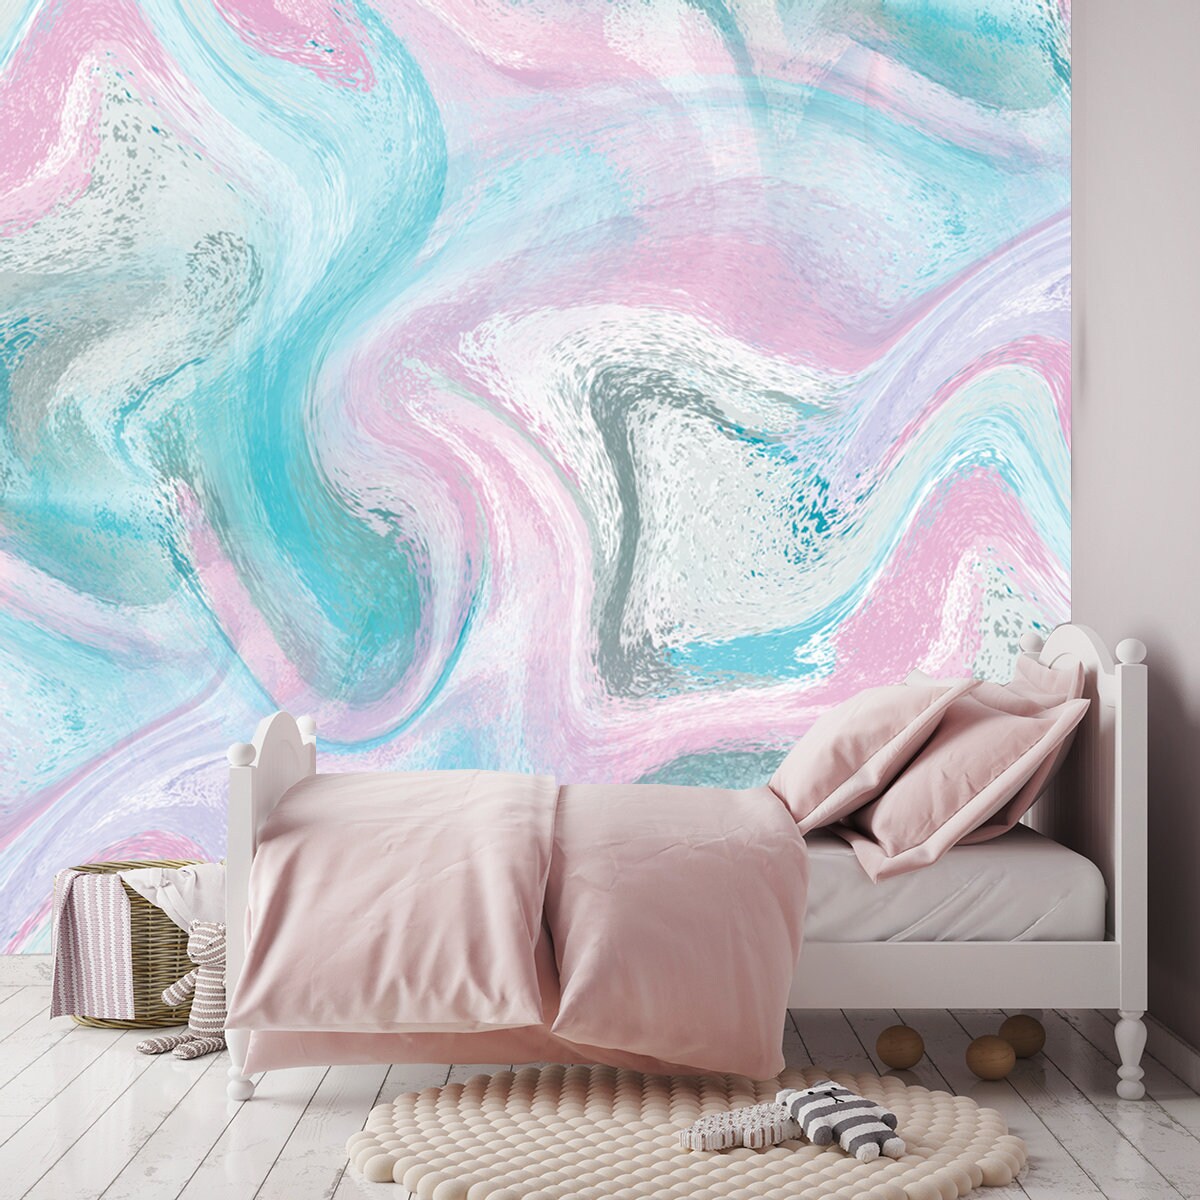 Modern Light Texture- Seamless Abstract Pattern-Cotton Candy Wallpaper Girl Bedroom Mural